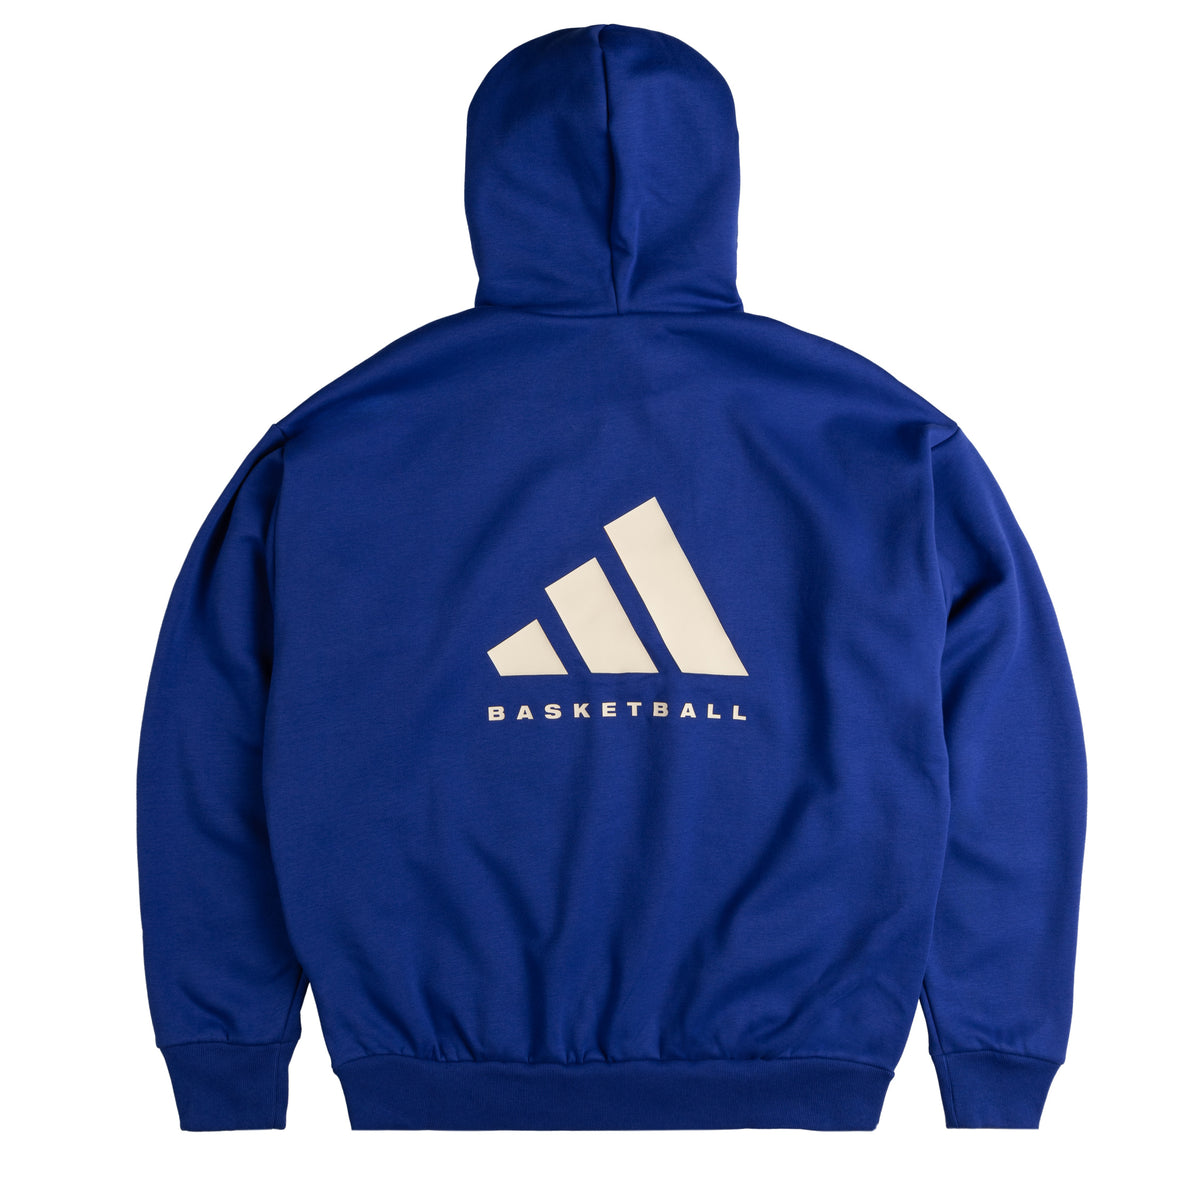 Adidas Basketball Fleece Hoodie – buy now at Asphaltgold Online Store!